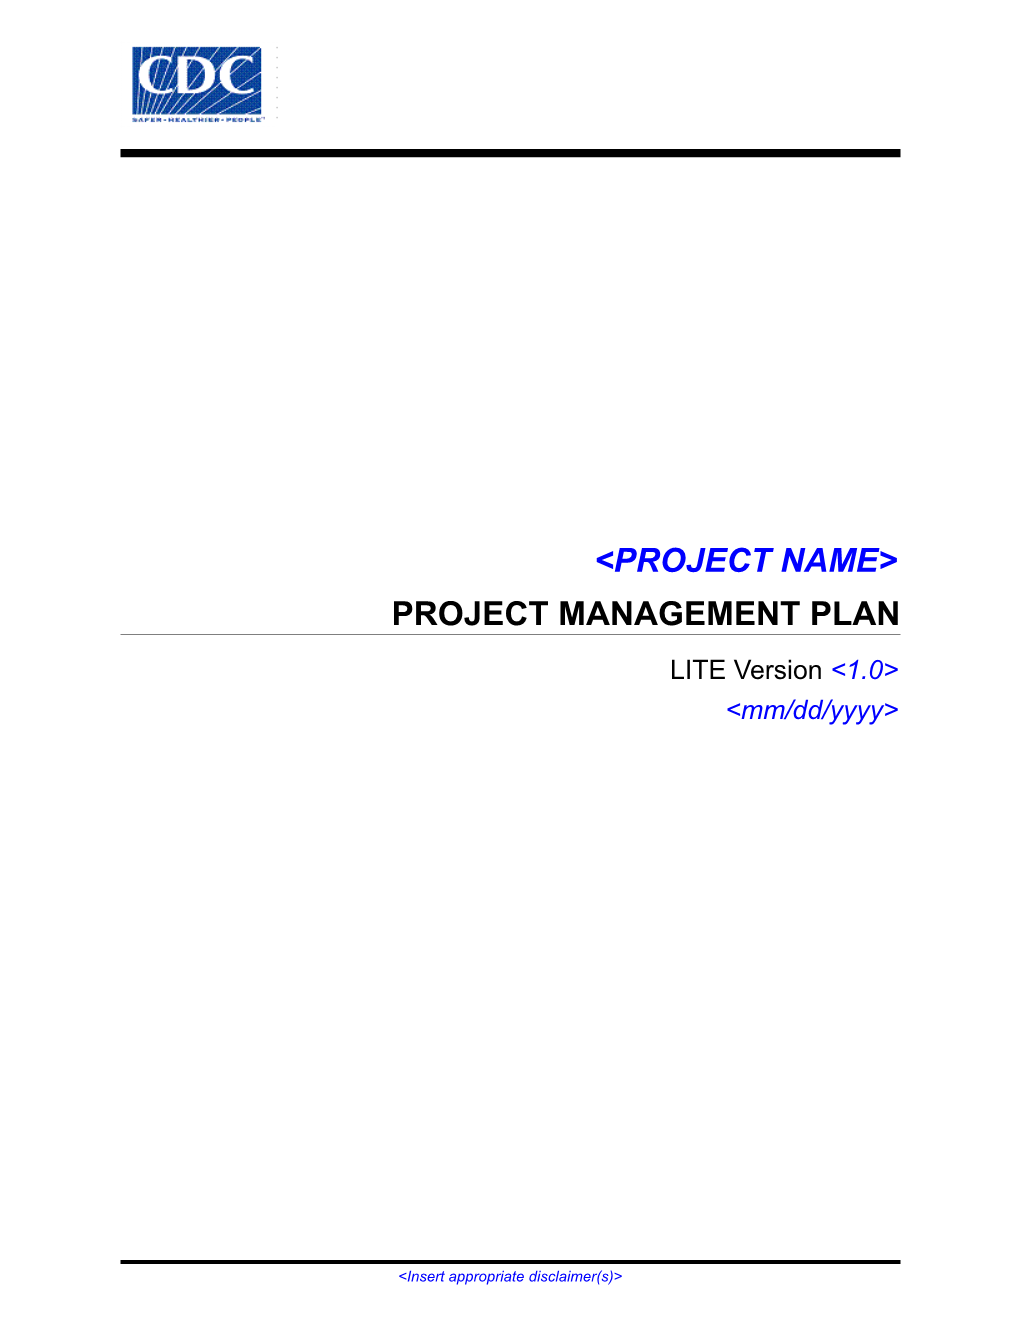 Project Management Plan - LITE Template